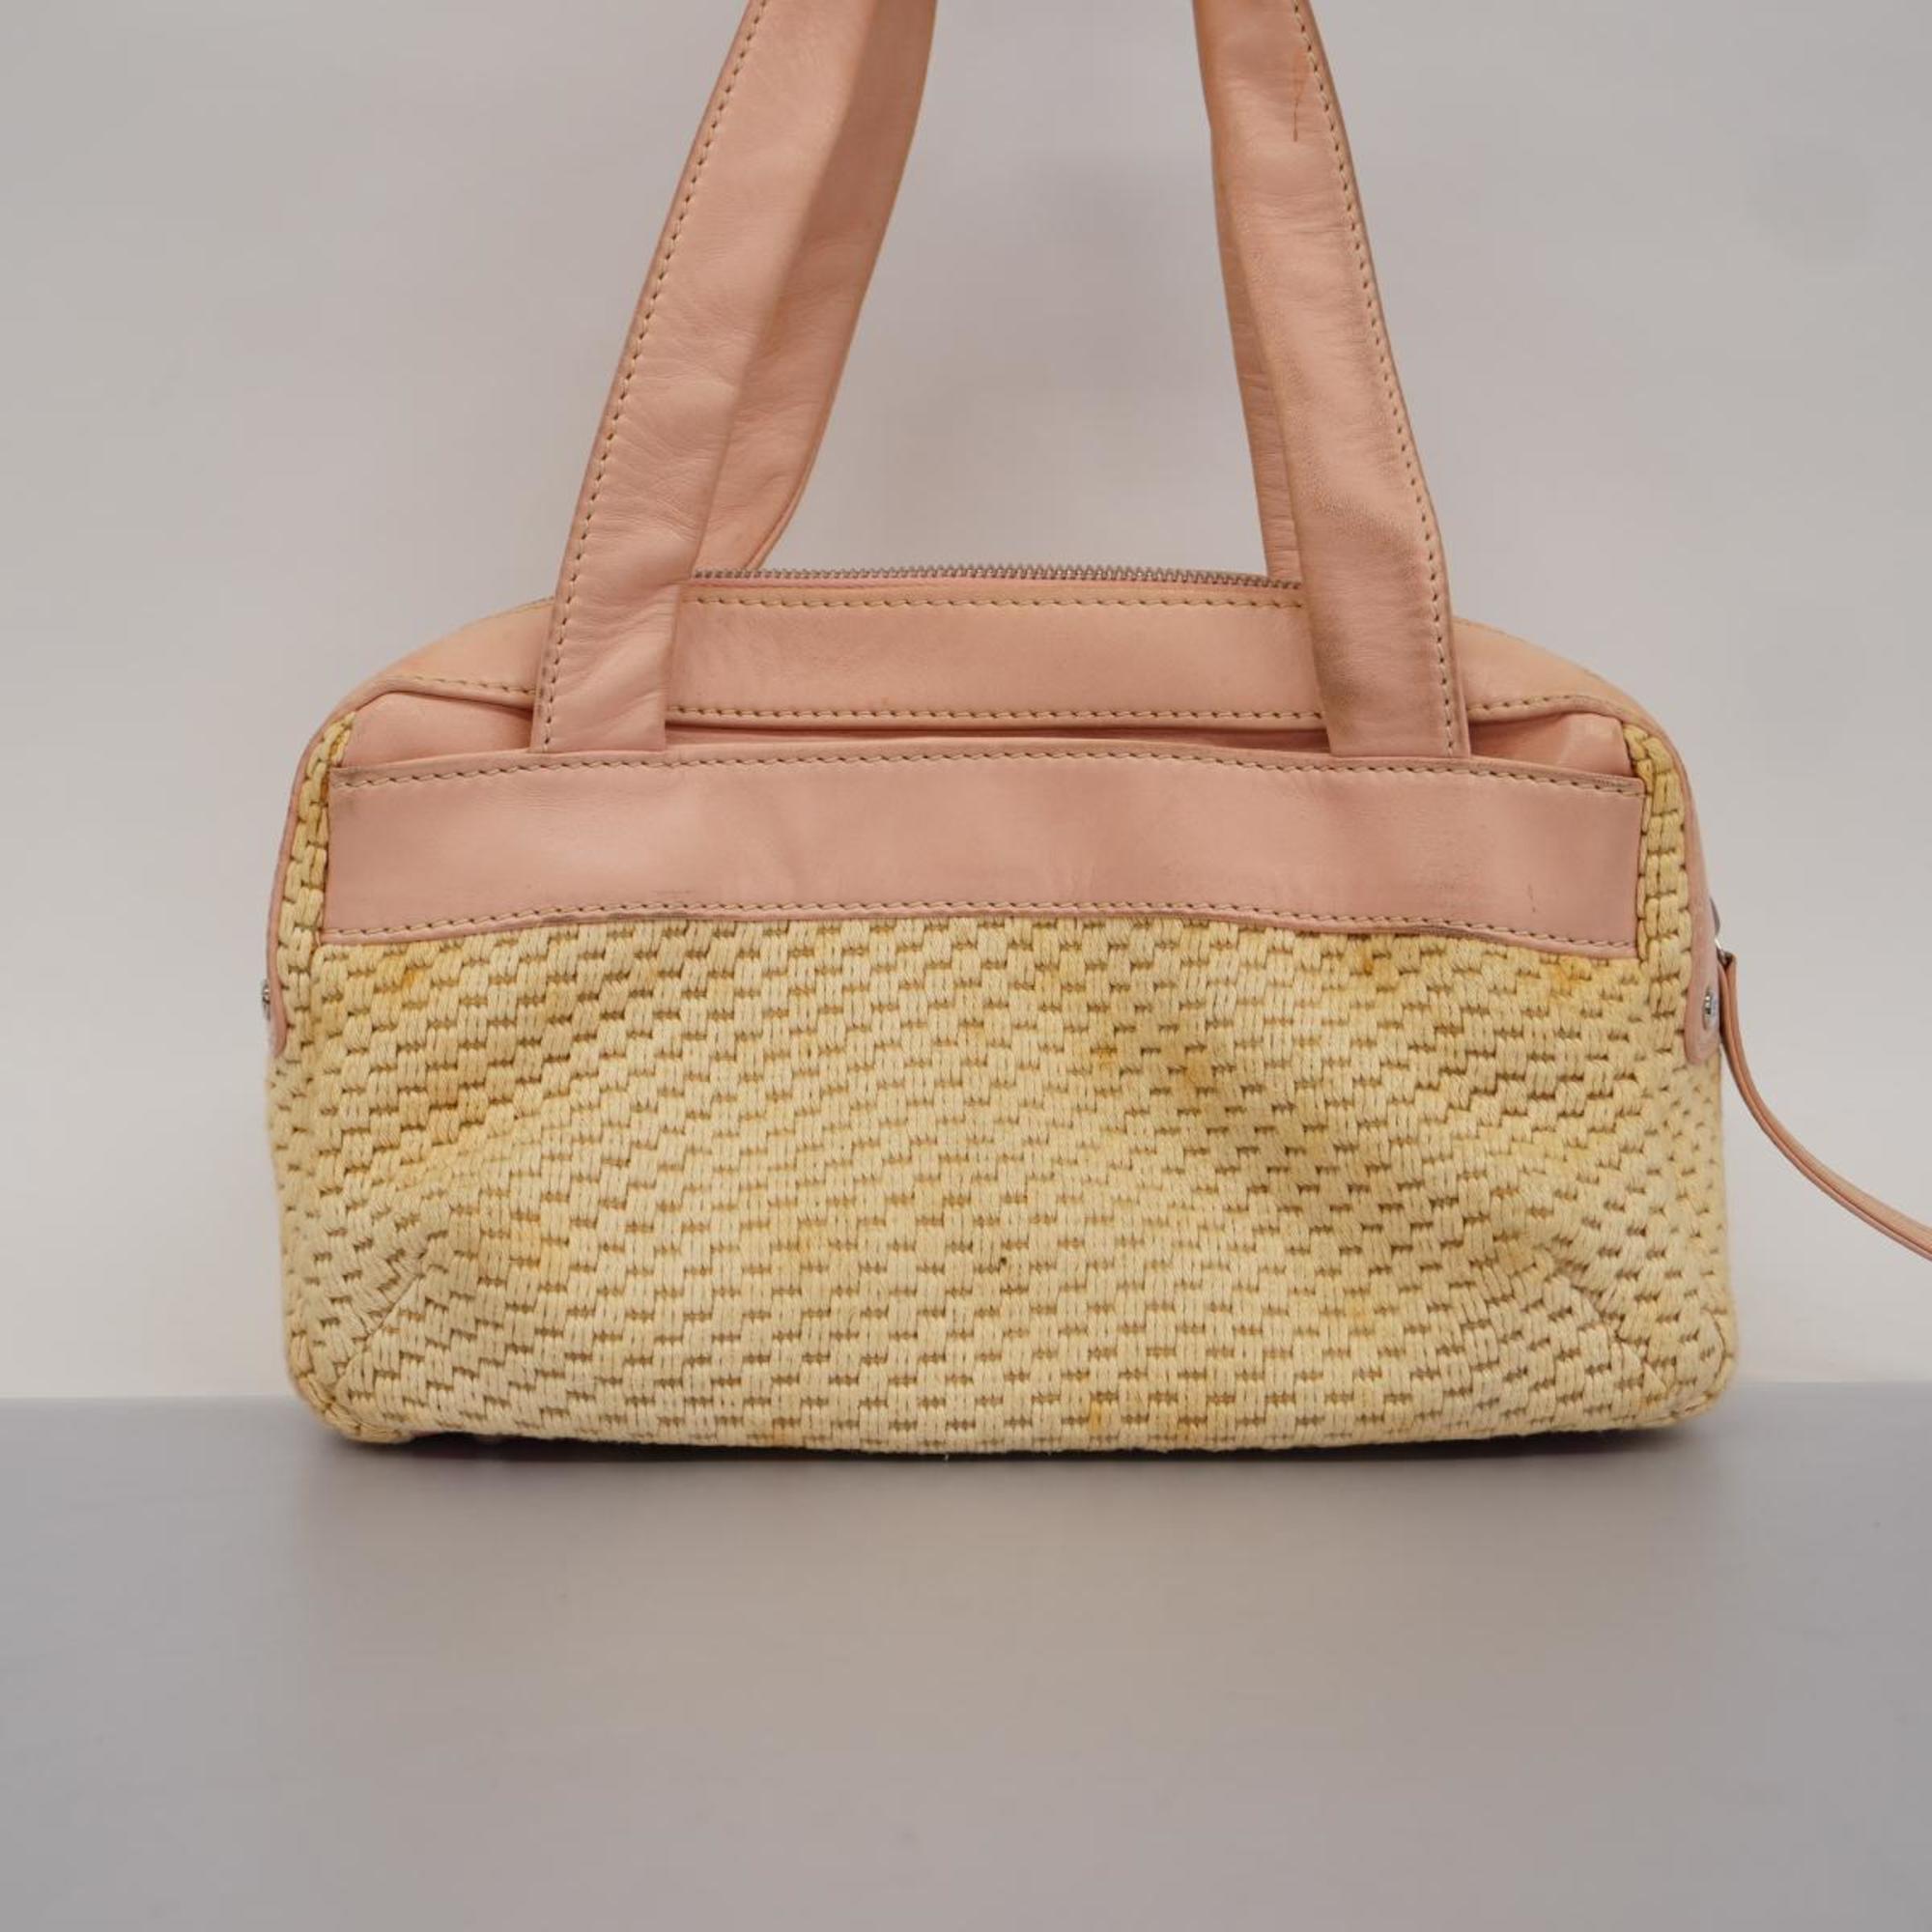 Chanel handbag lambskin beige pink ladies